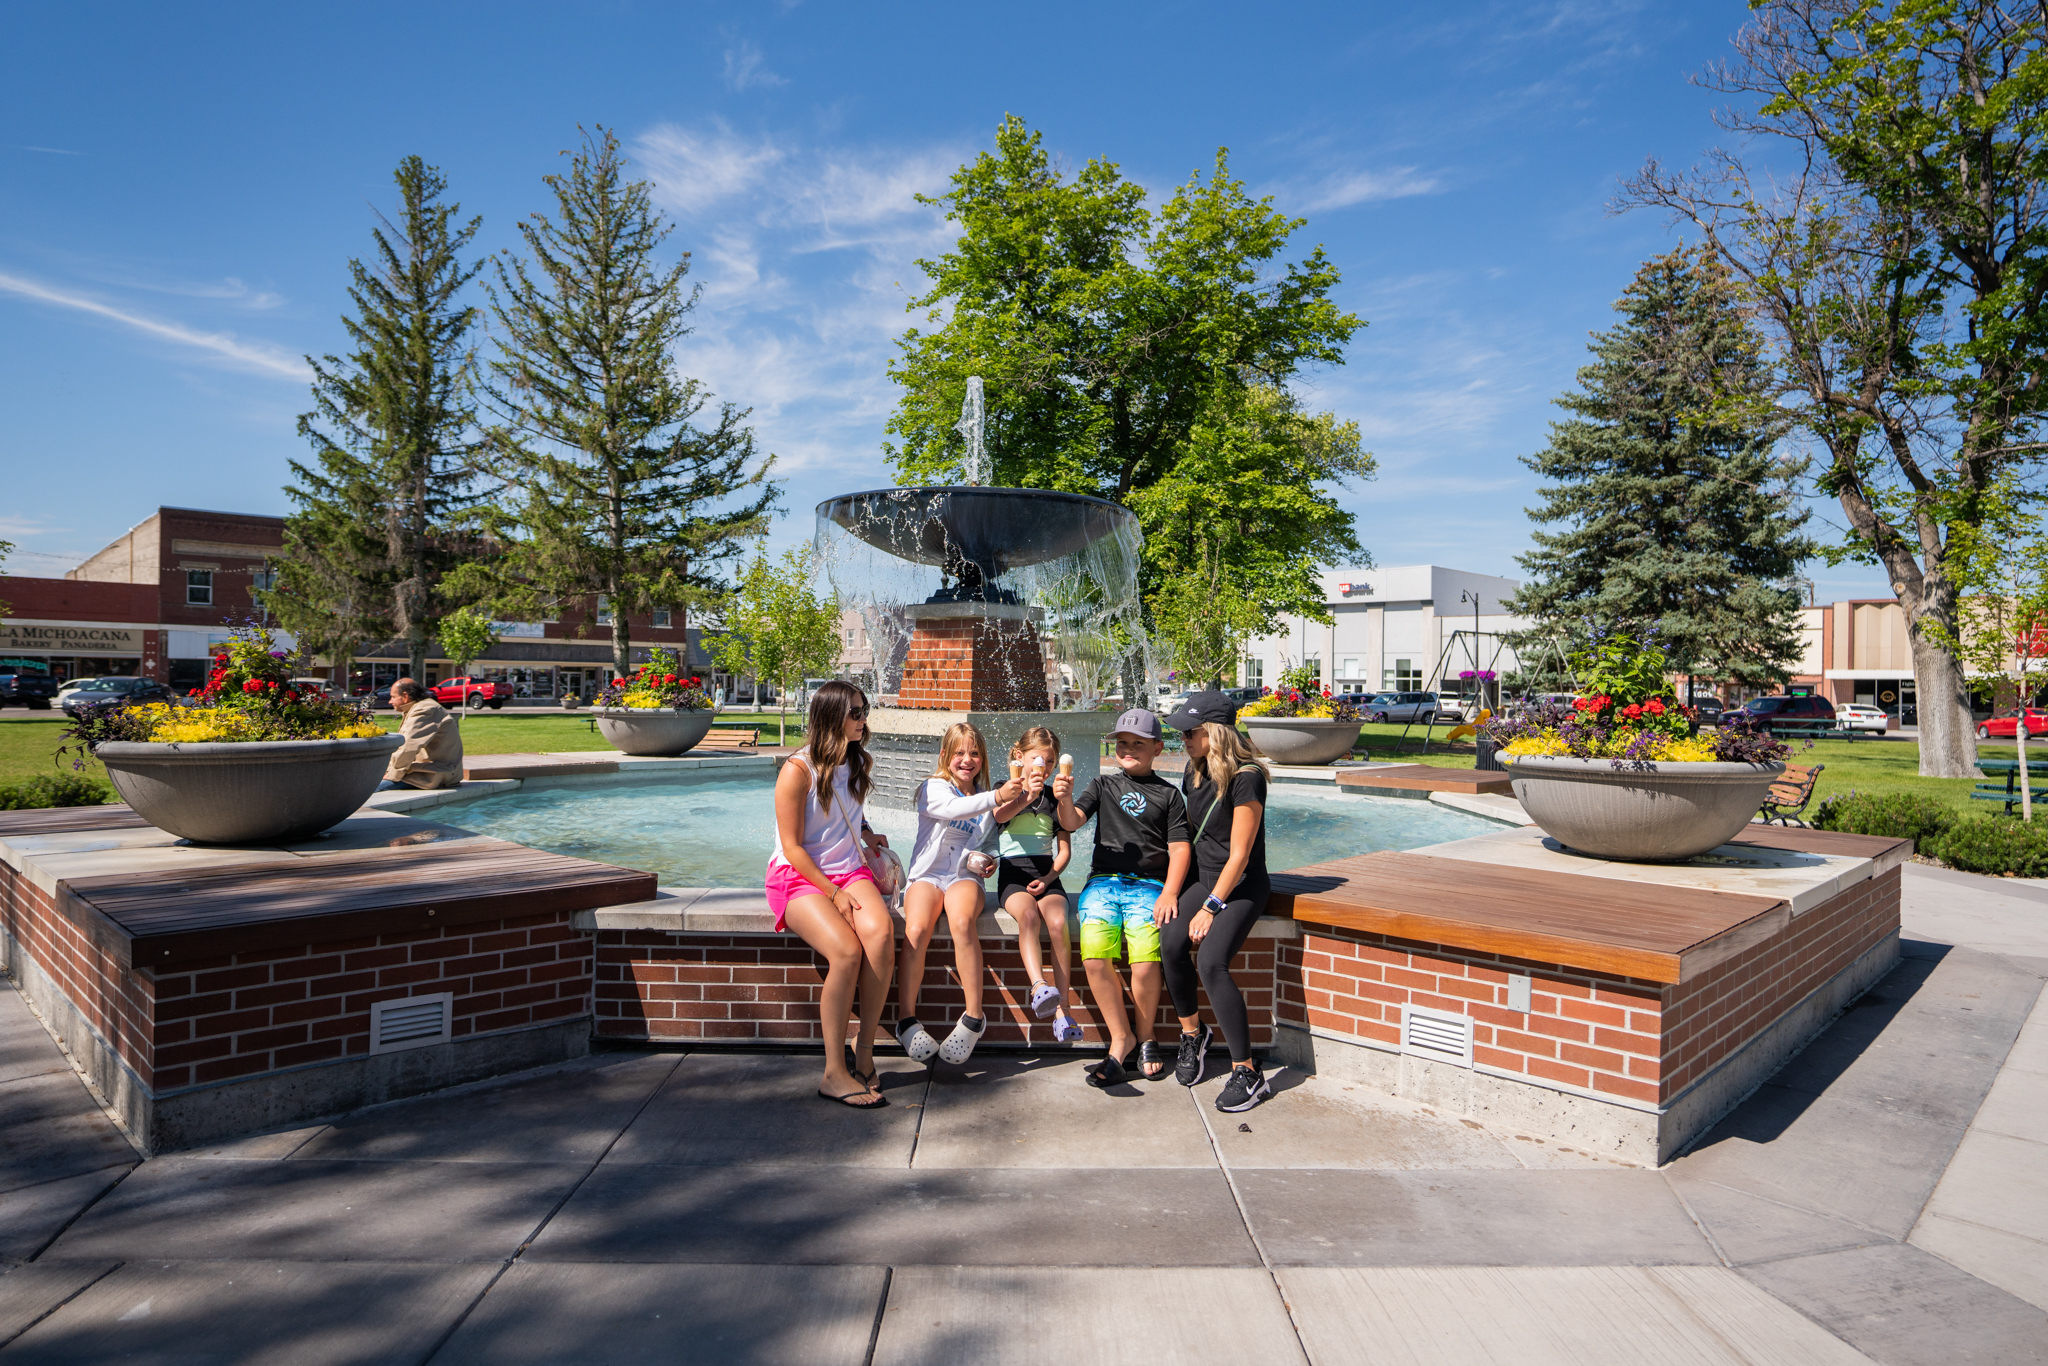 Kids enjoying the Rupert Square in Southern Idaho